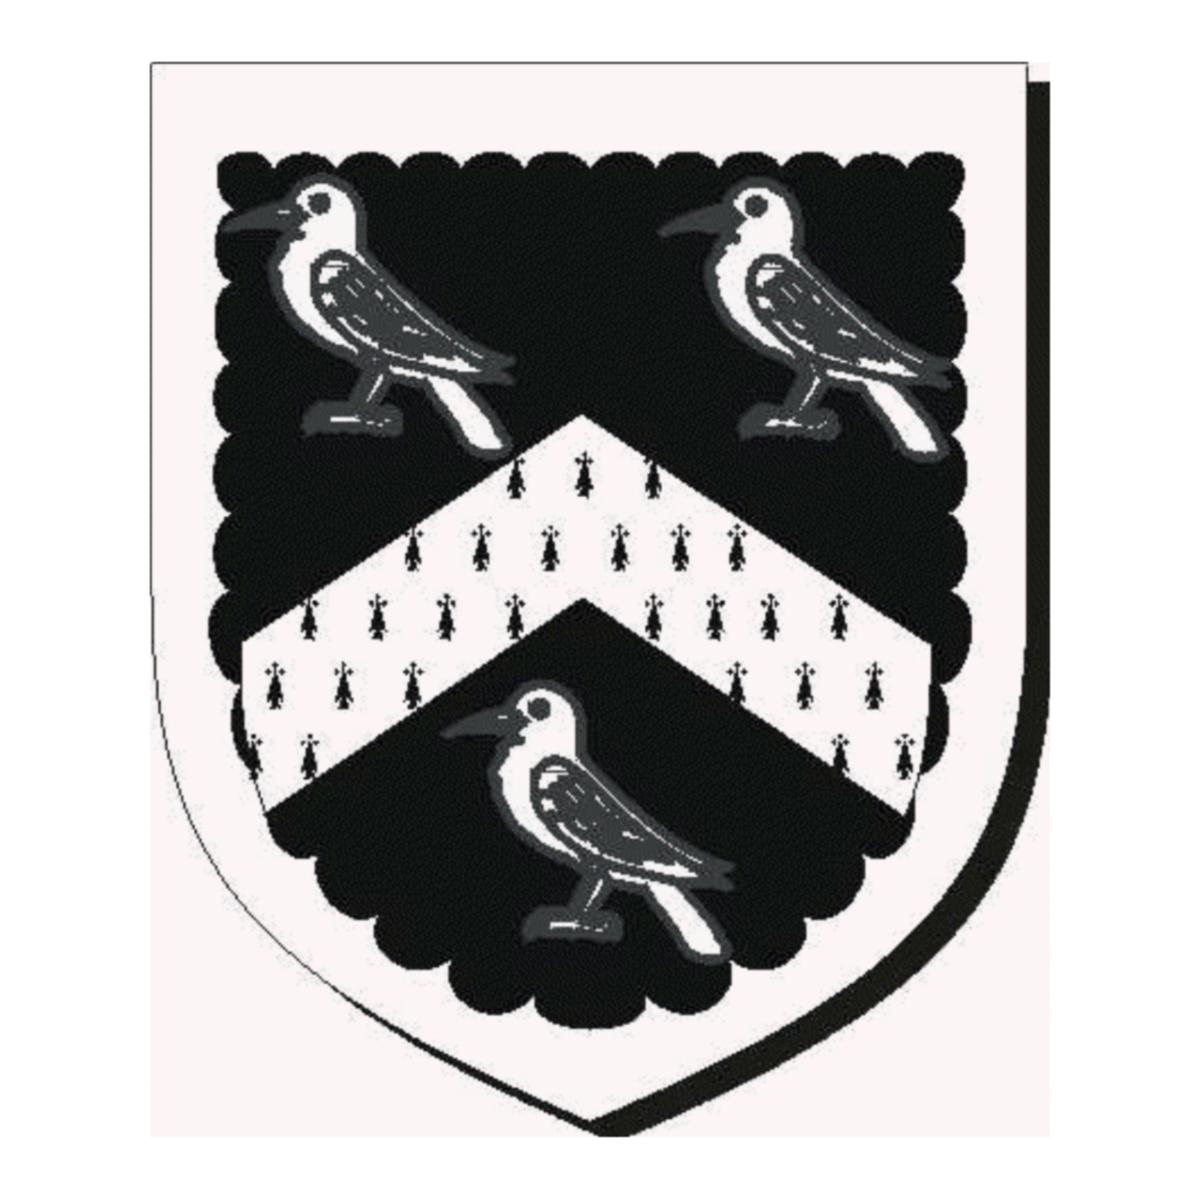 Wappen der FamilieStanley